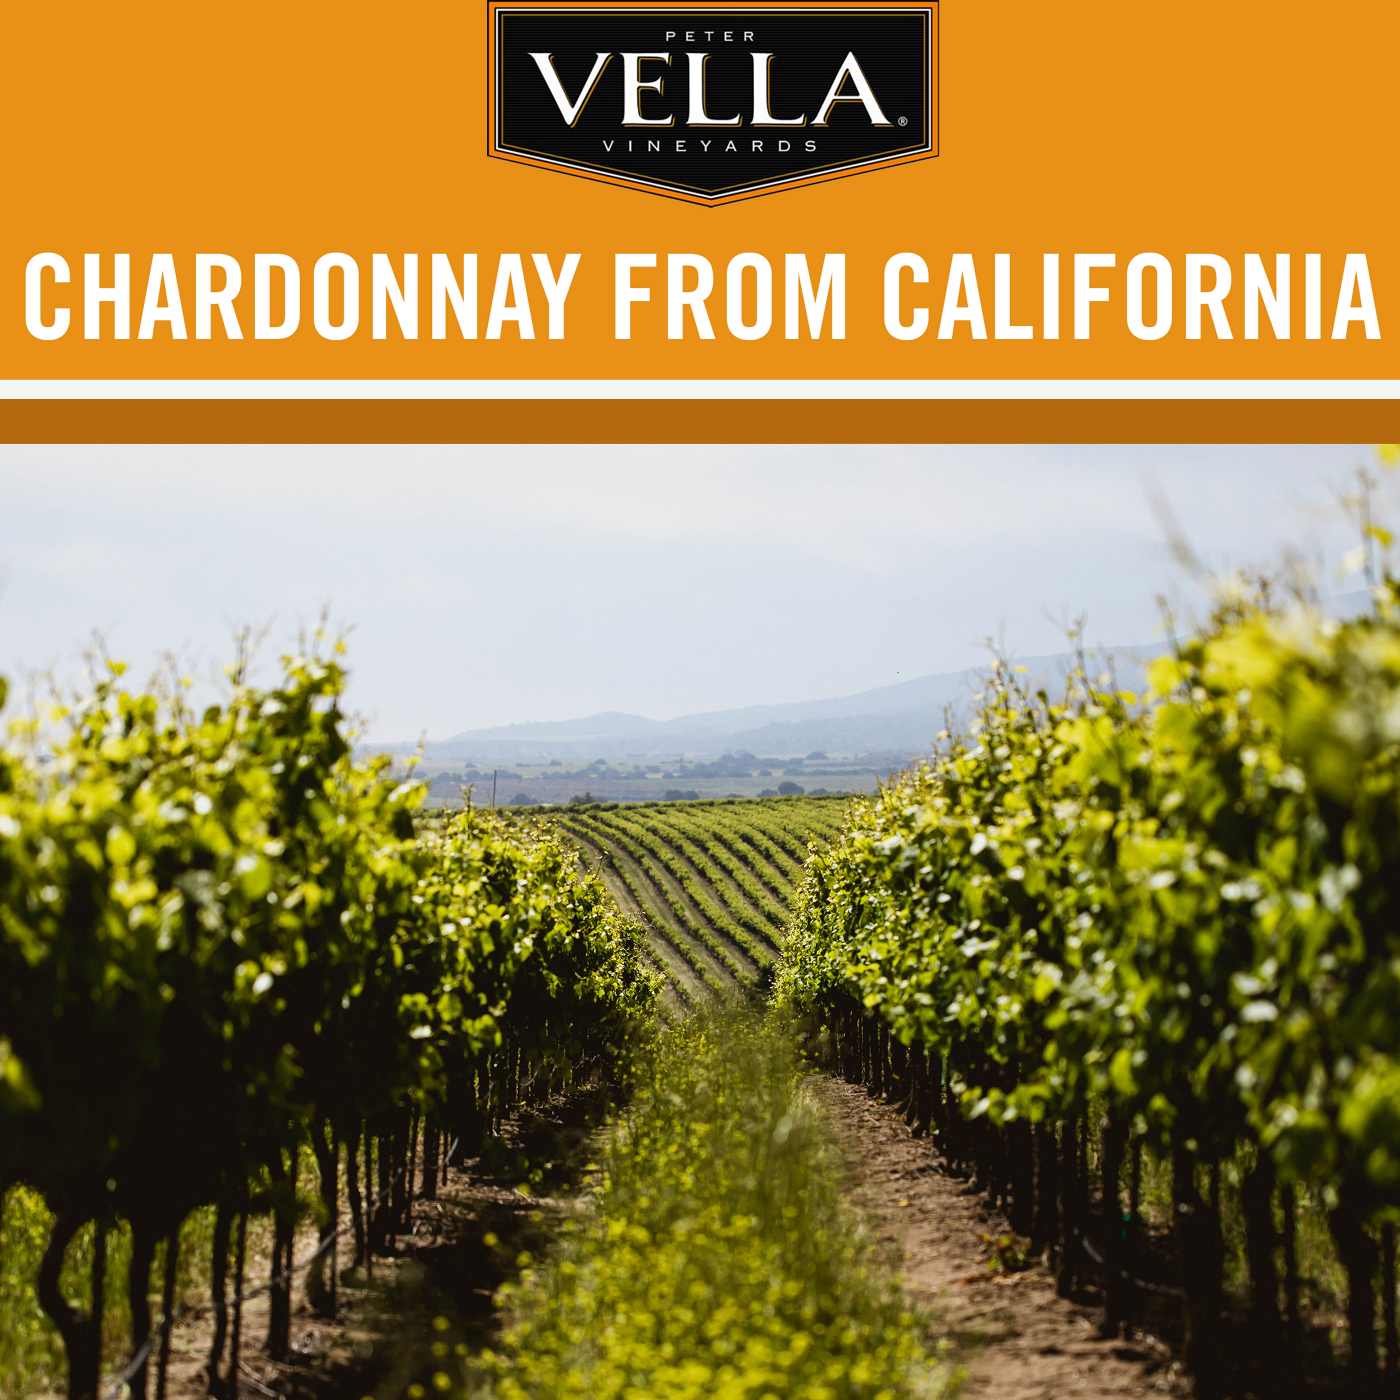 Peter Vella Chardonnay White Box Wine; image 2 of 6